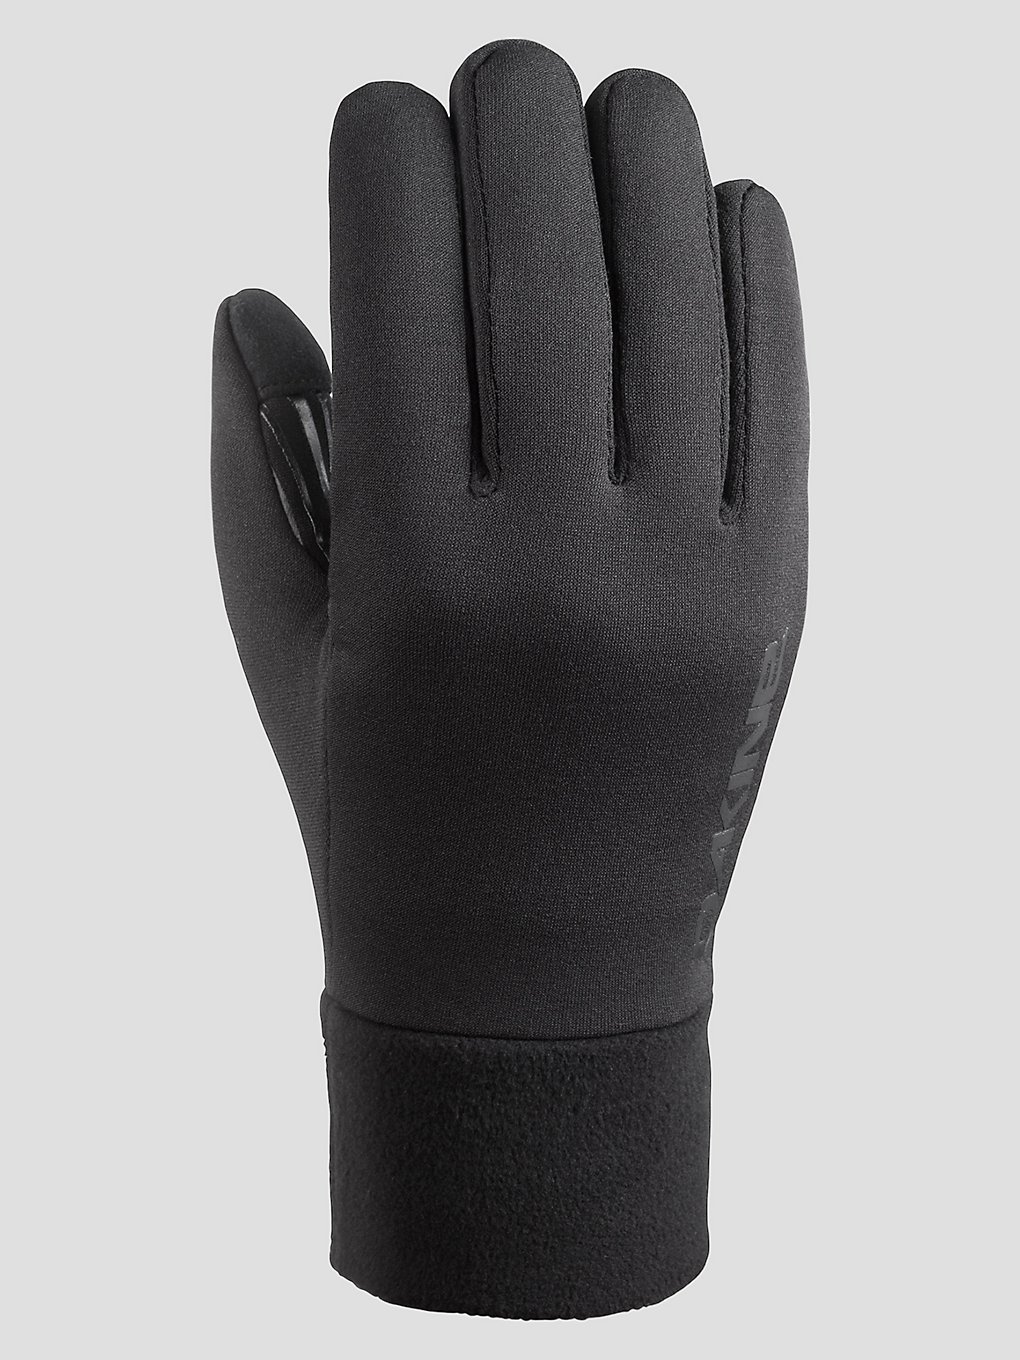 Dakine Storm Liner Handschuhe black kaufen